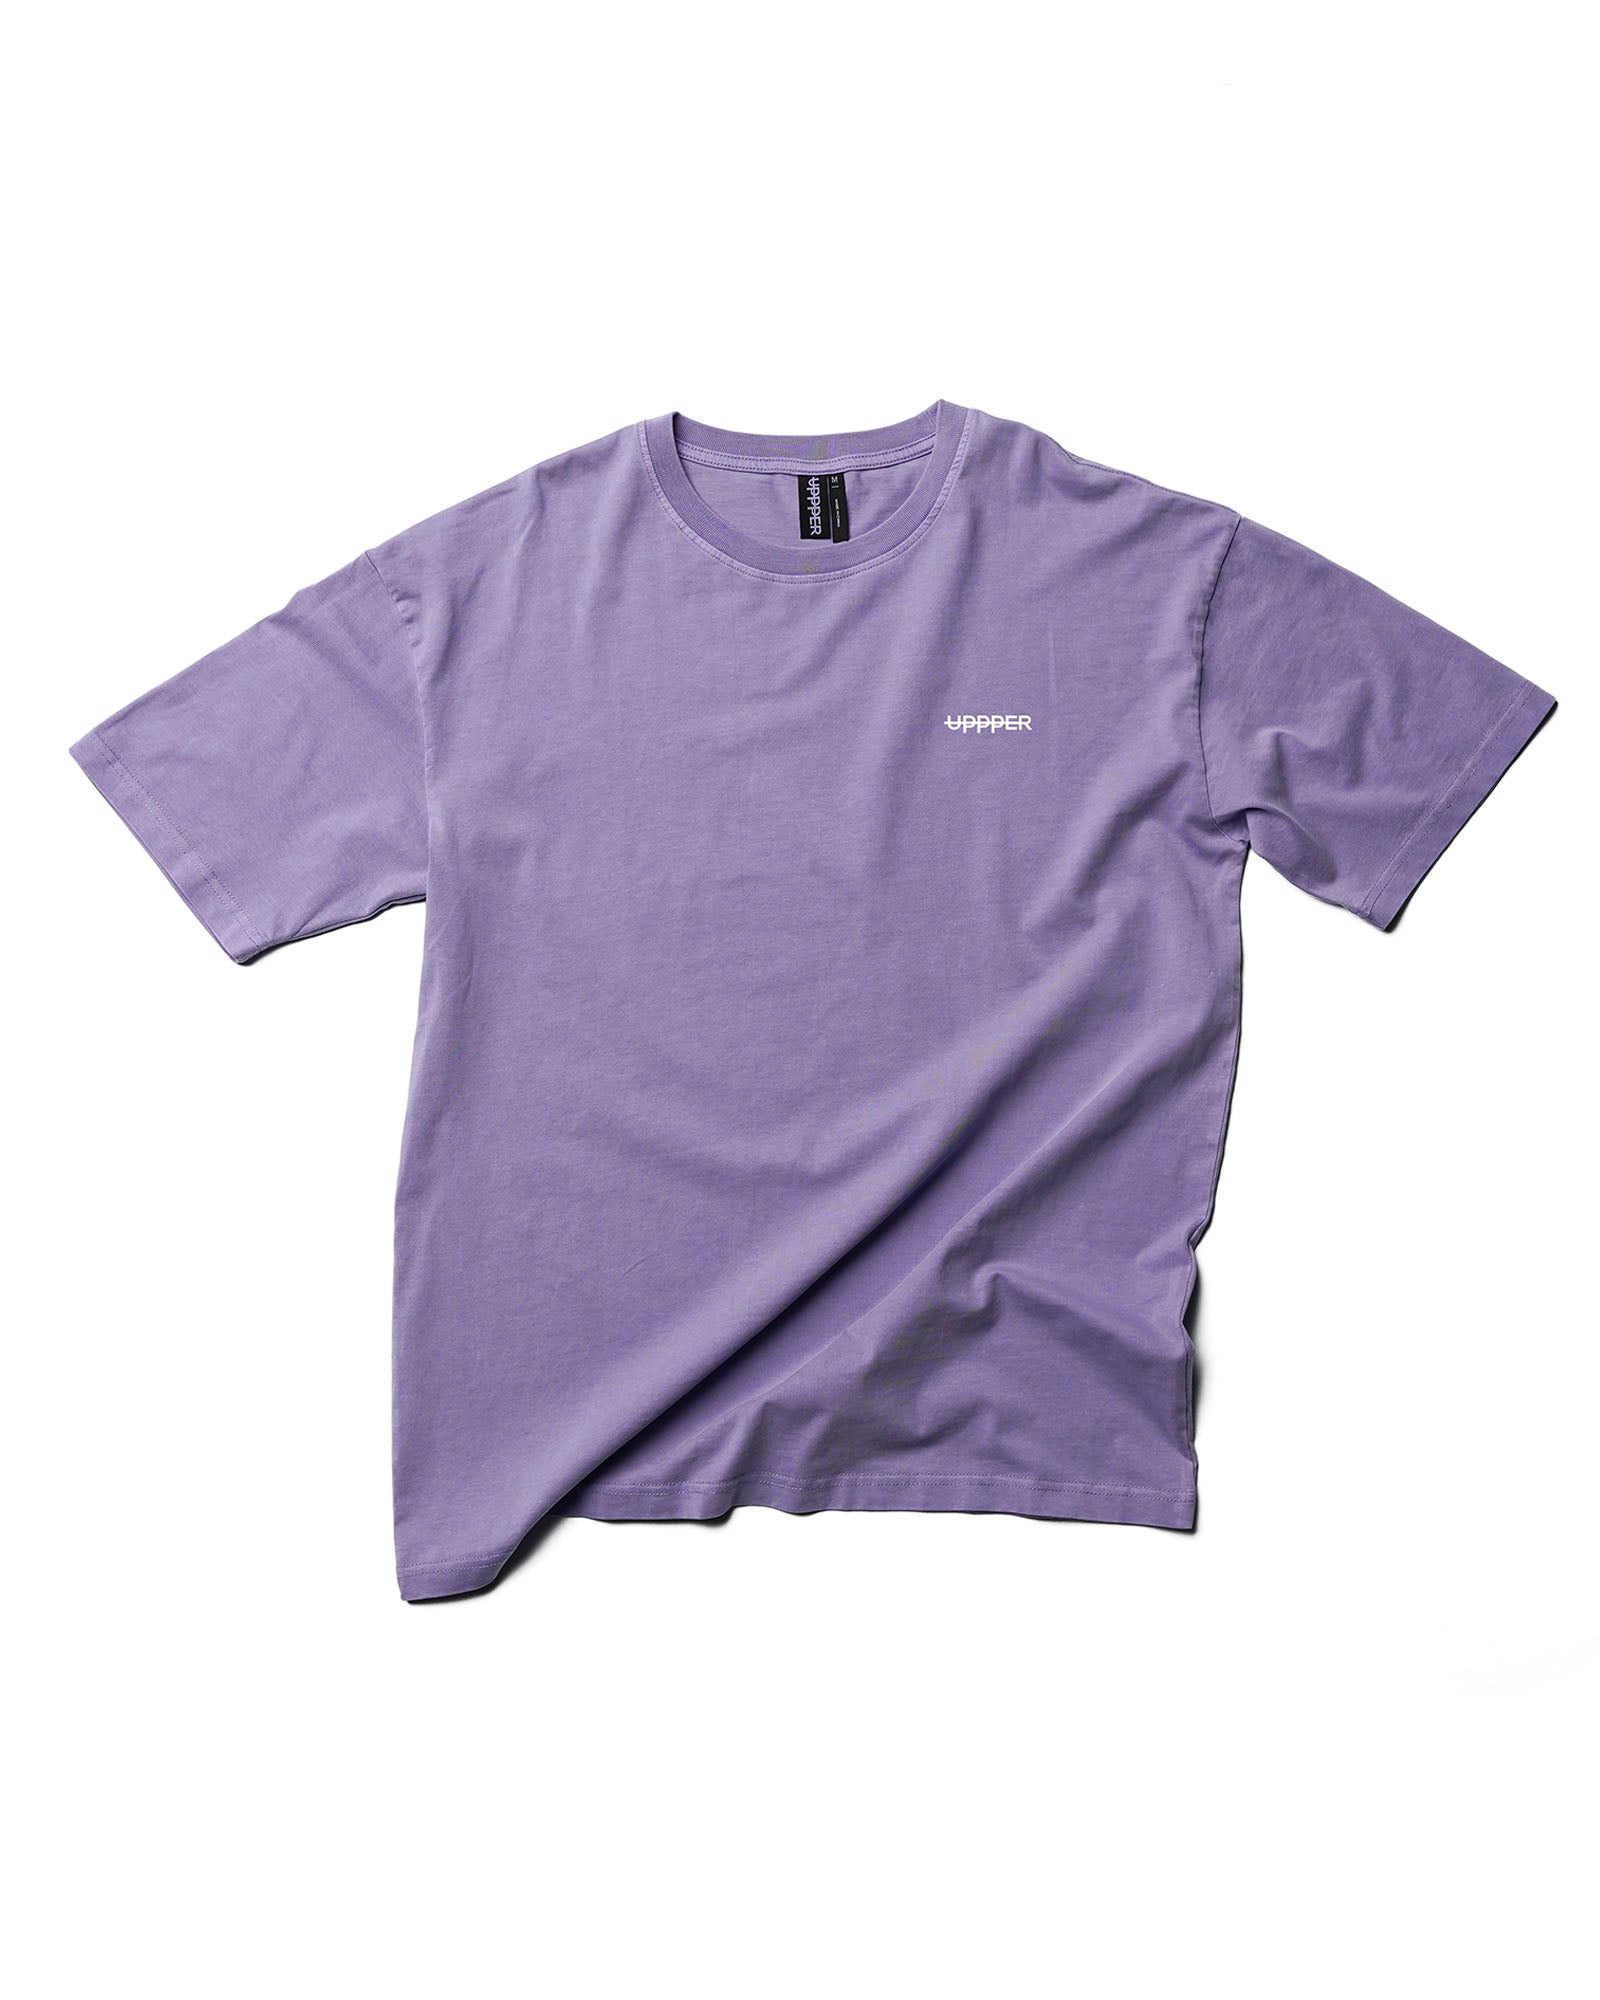 uppper premium fitness t-shirt lavender